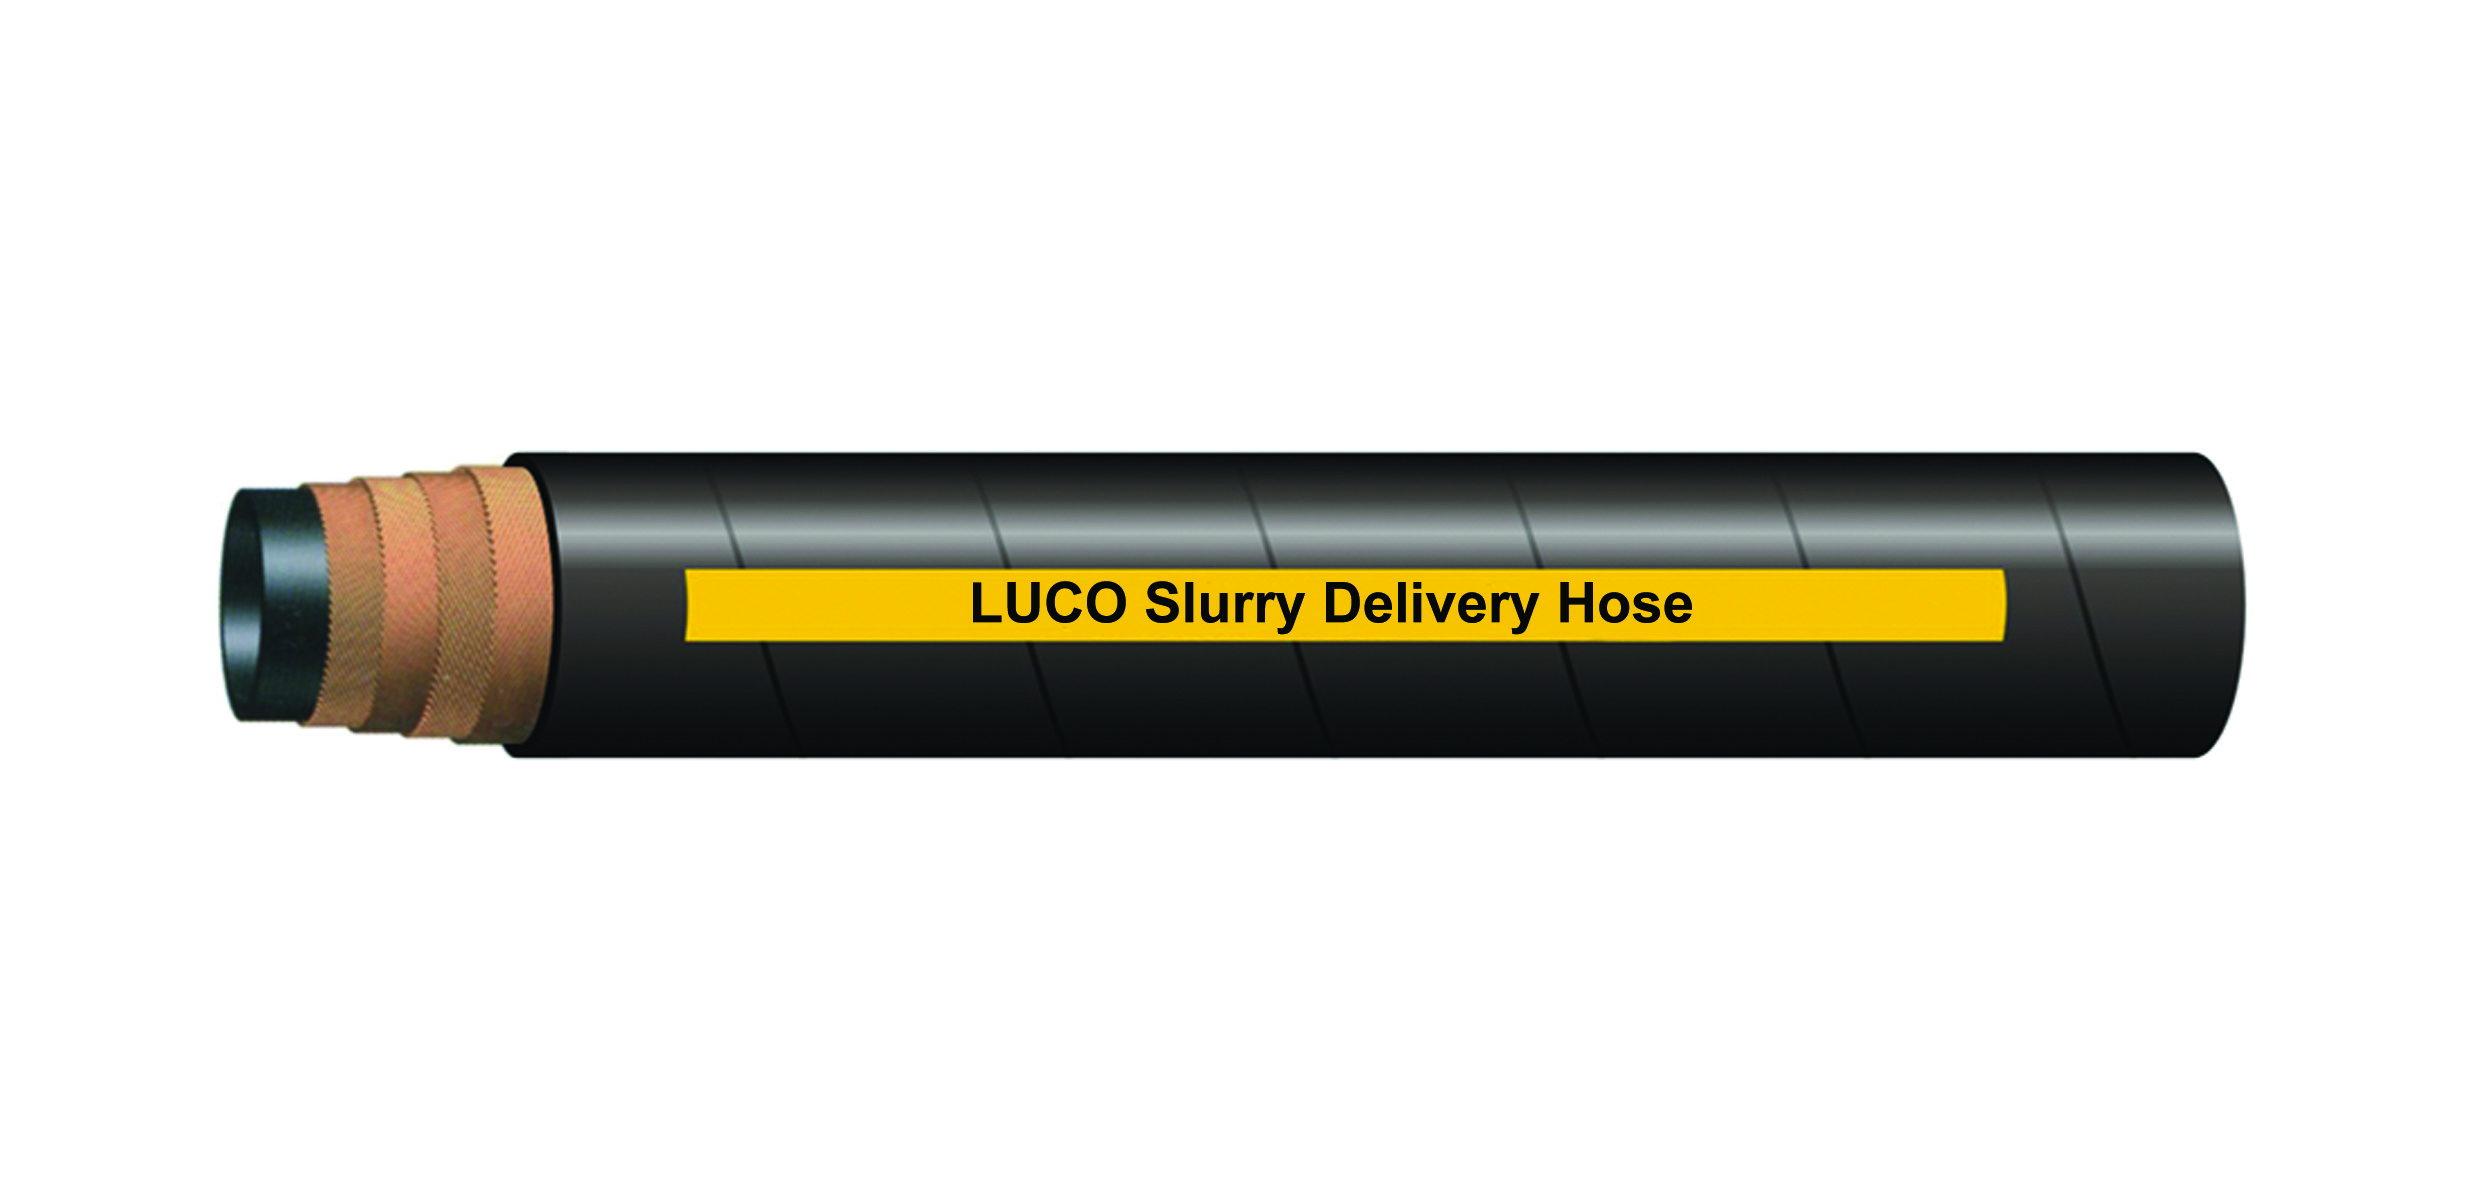 LUCOHOSE Slurry Delivery Hose